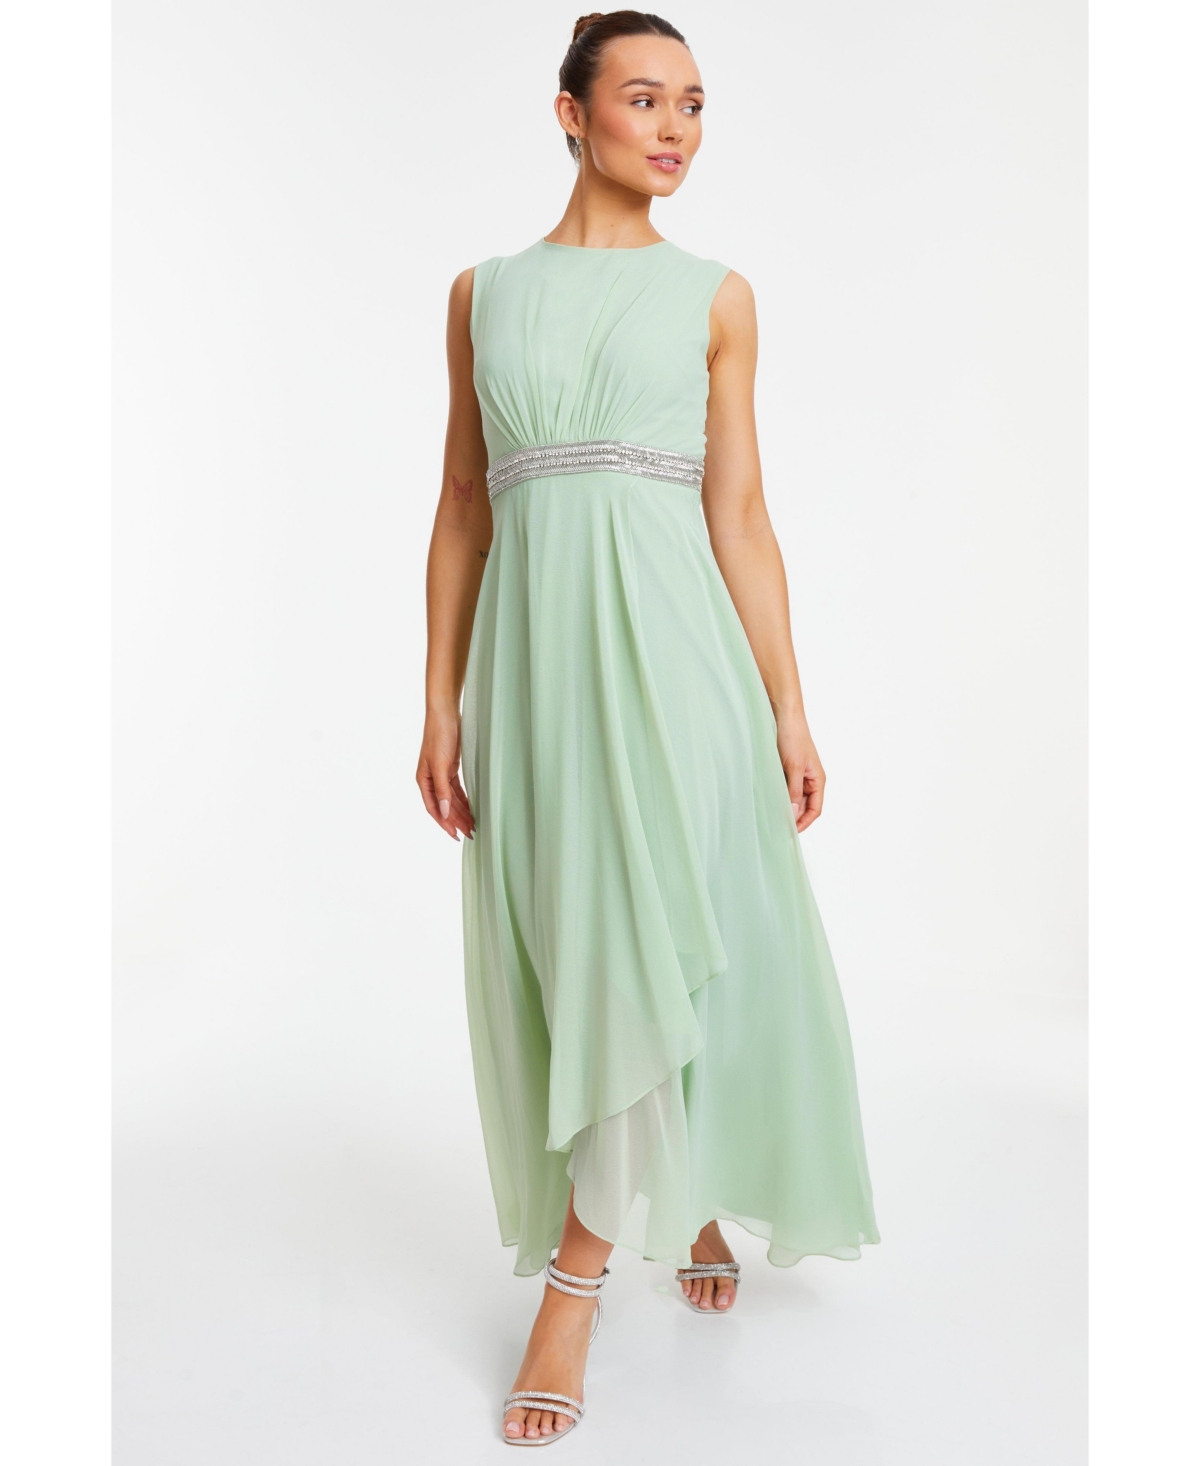 Women's Chiffon Embellished Round Neck Evening Dress - Green